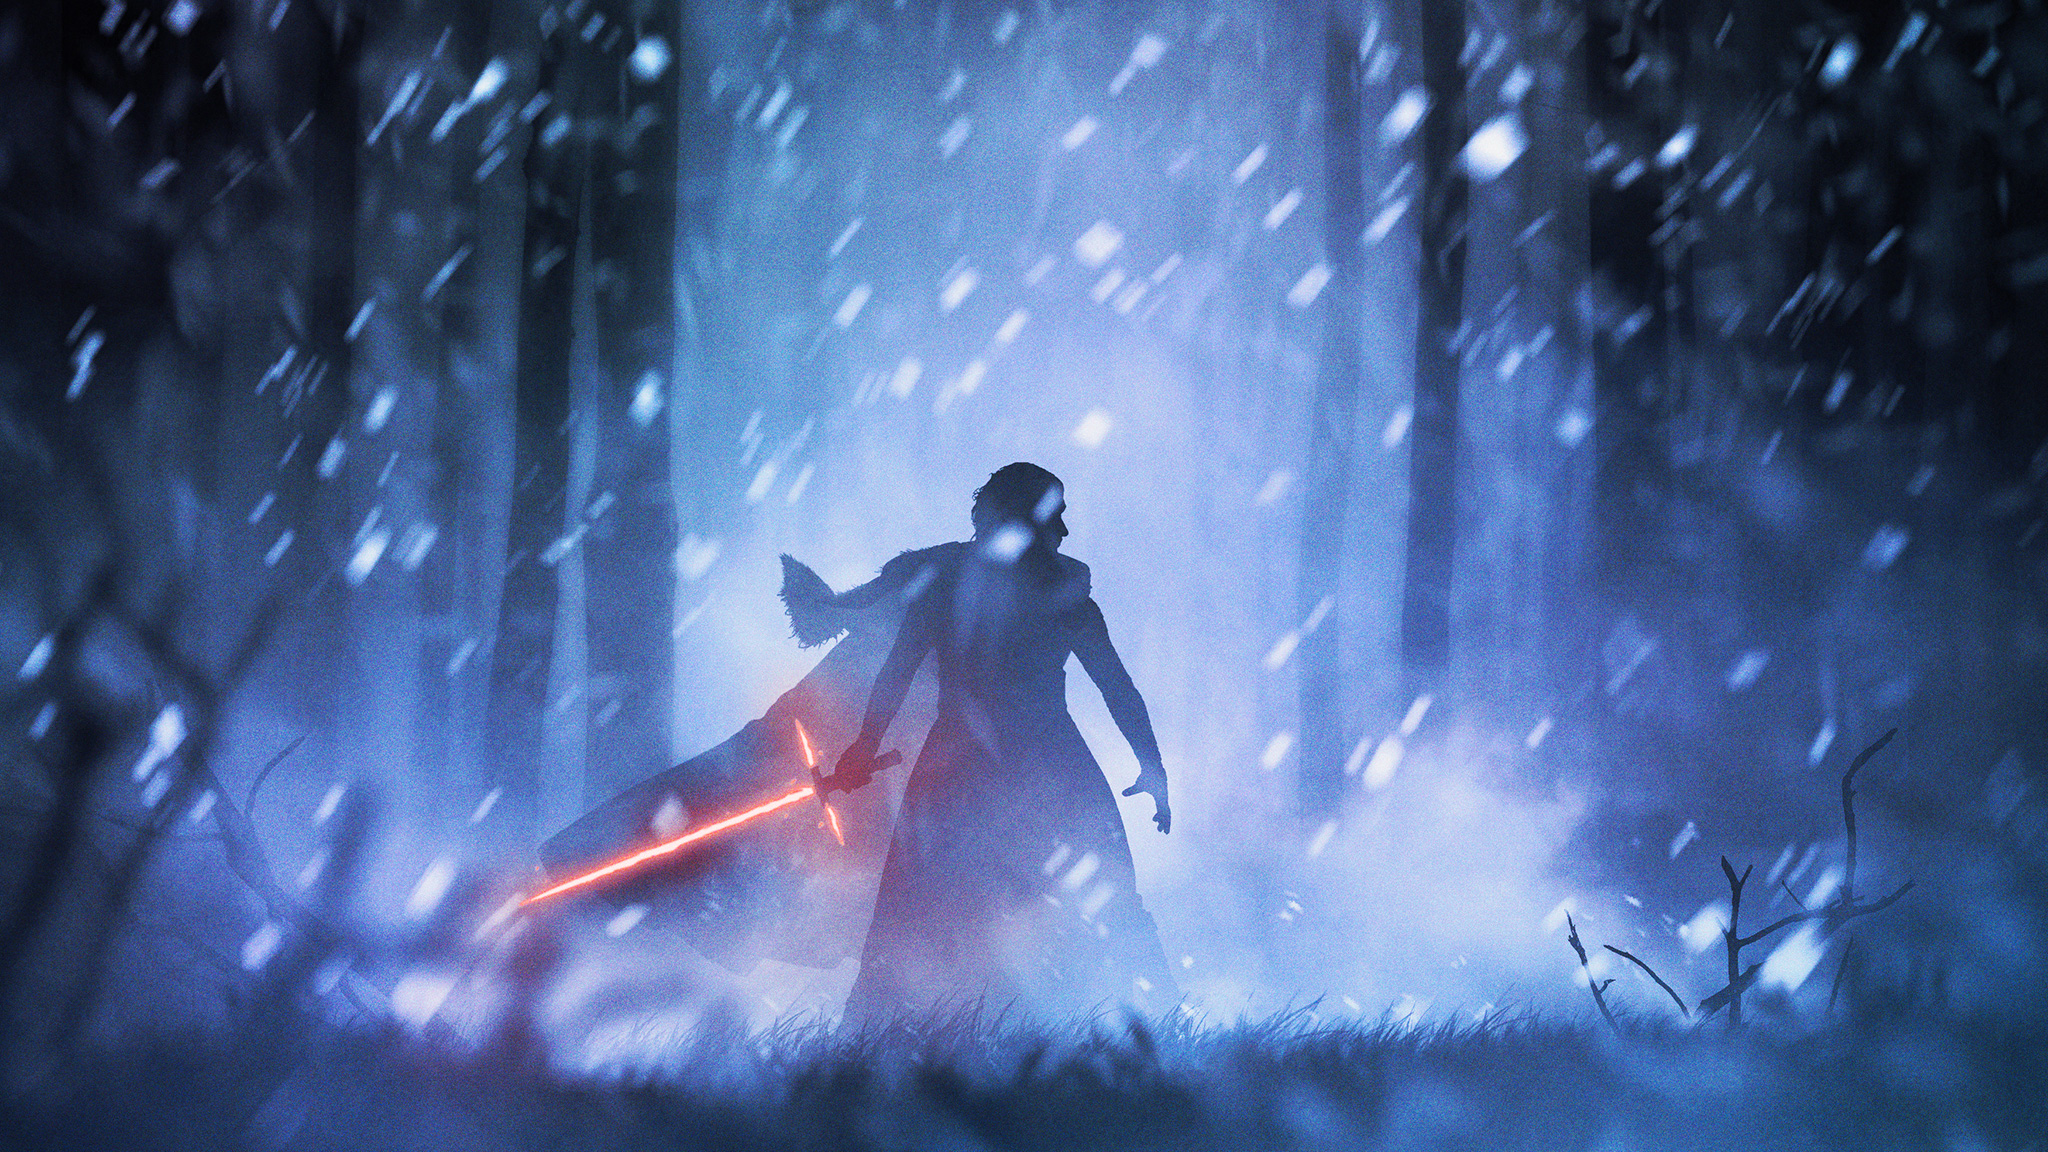 Kylo Ren Star Wars Digital Art, HD Artist, 4k Wallpaper